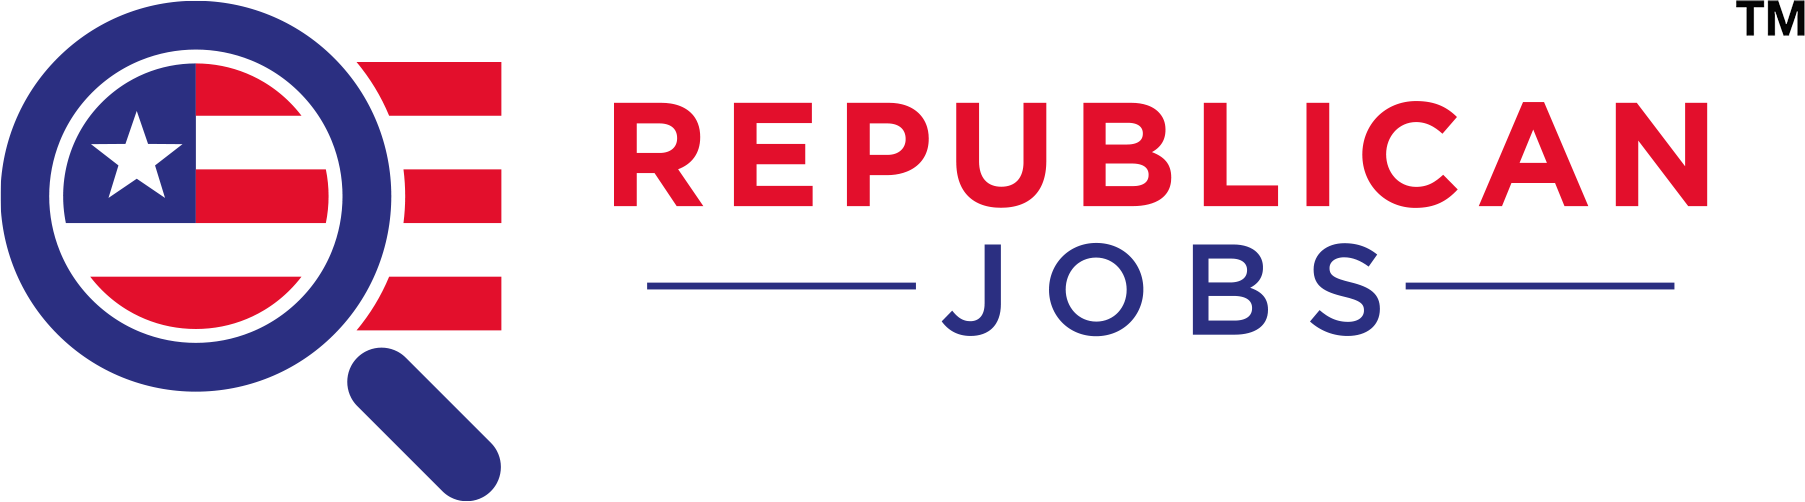 Republican jobs in Ocala Florida jobs